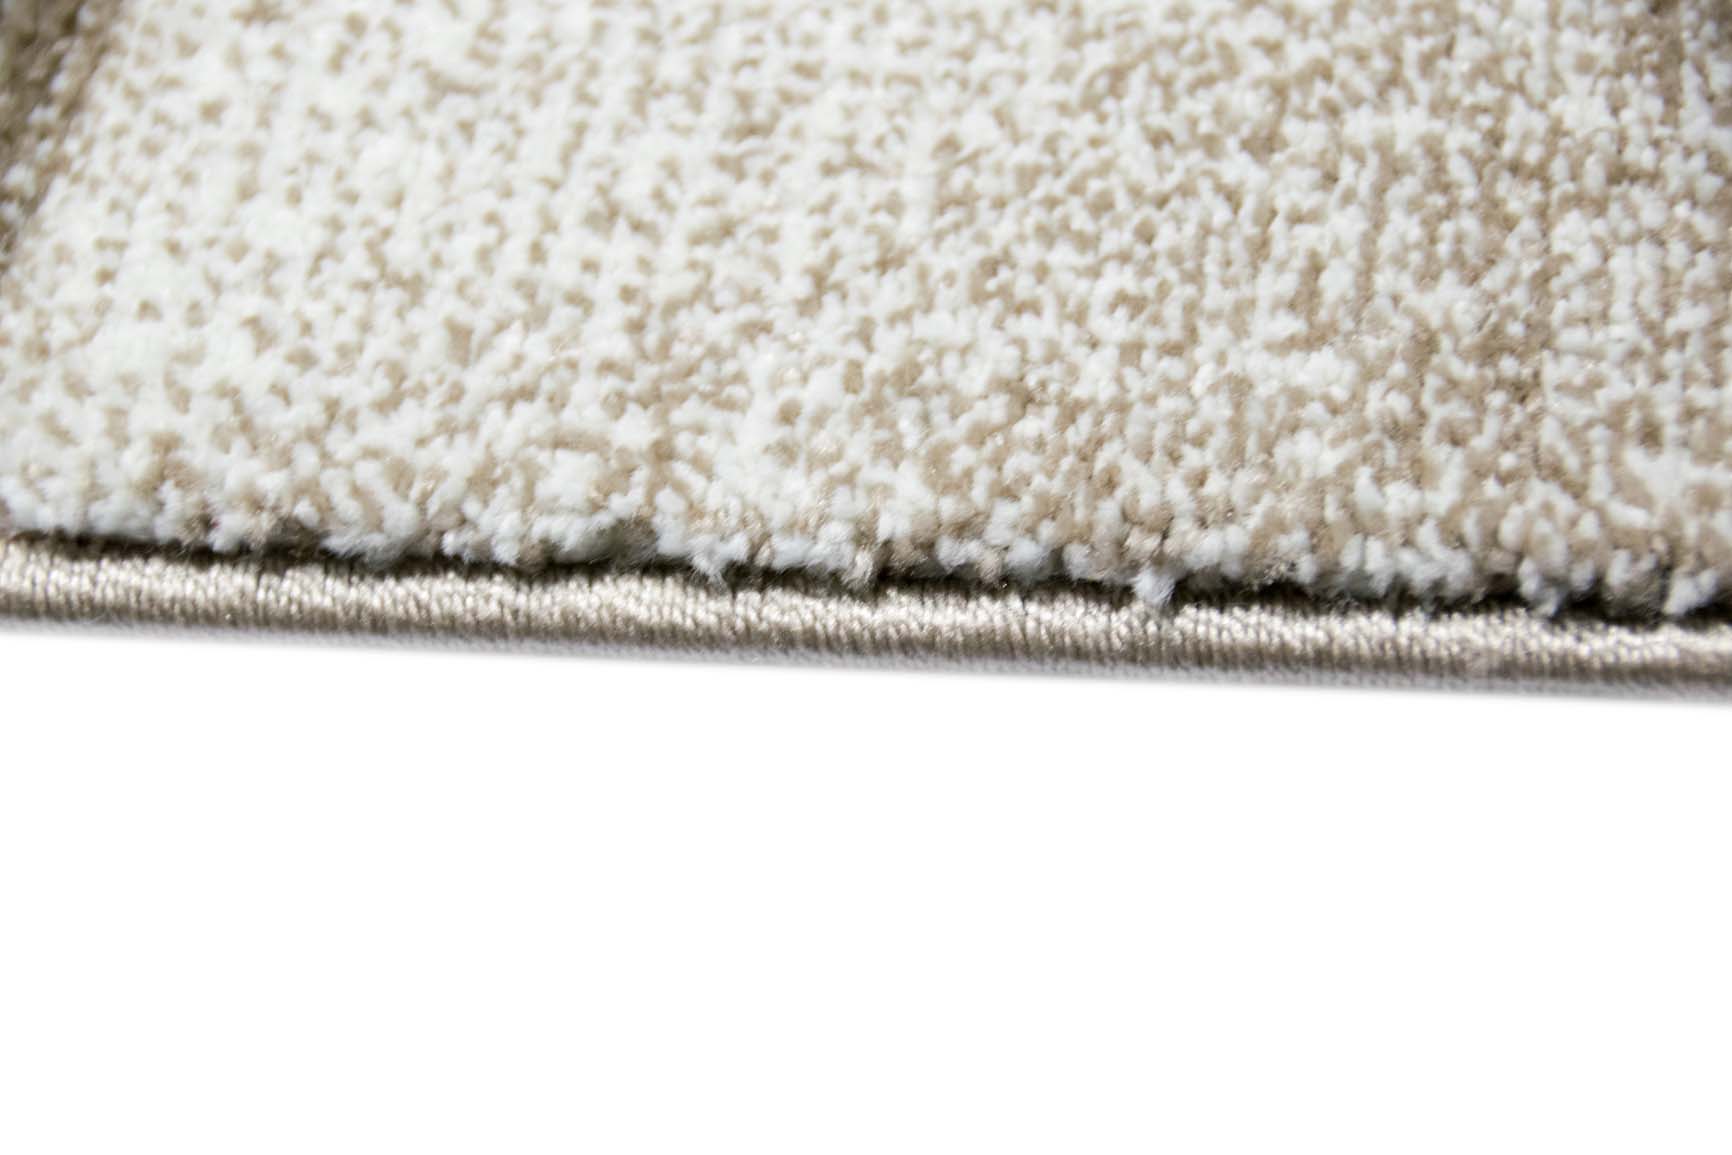 Modern -Traum and Teppich cheap carpet dreams High-quality - at & designer carpets: